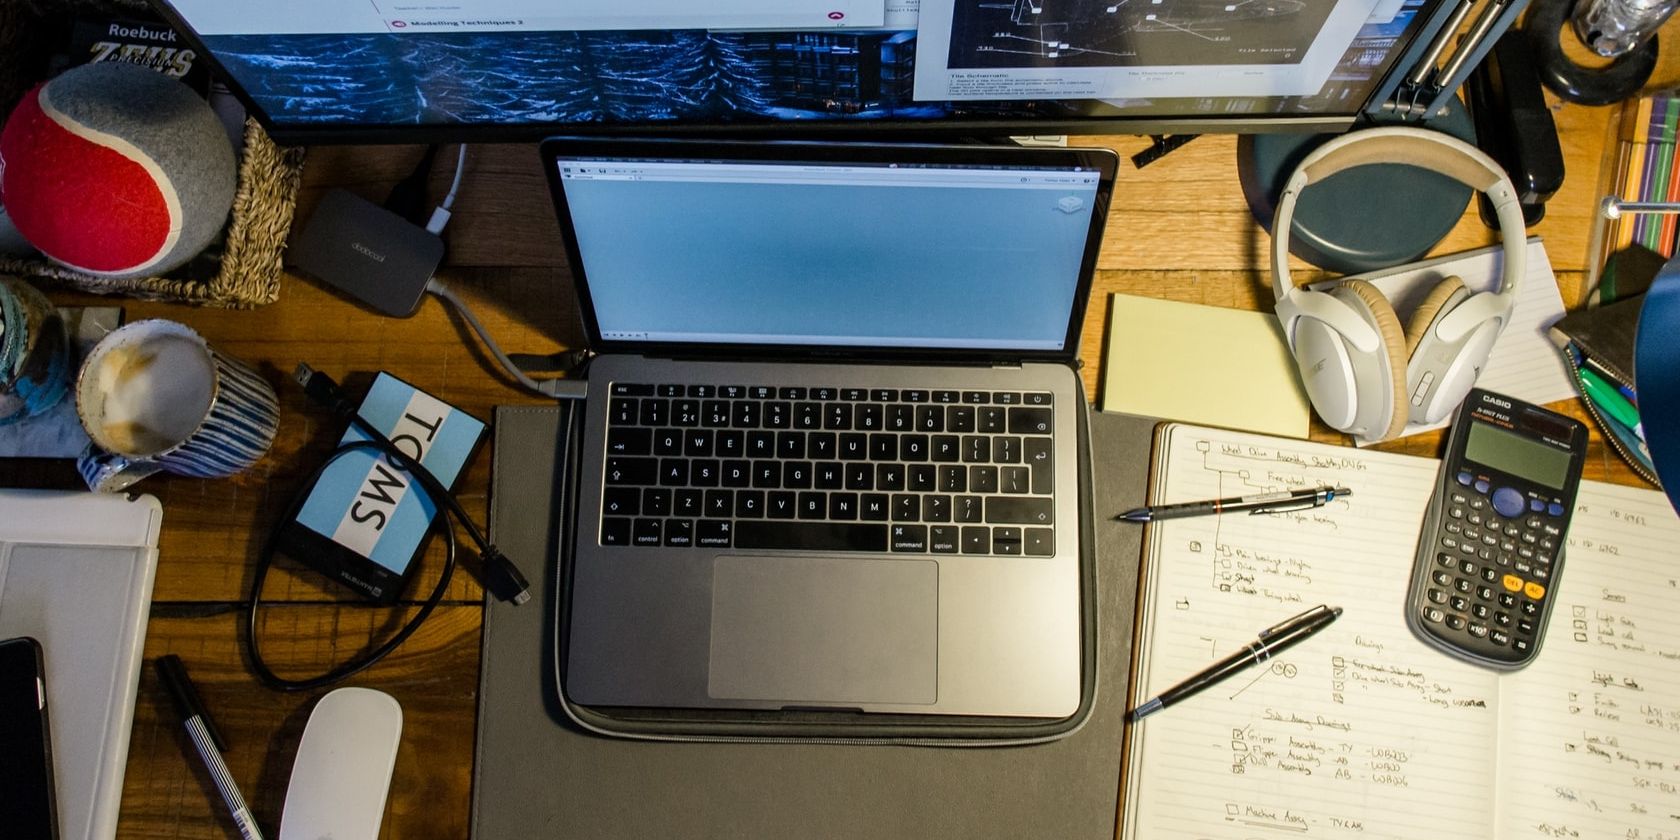 Open Macbook on a cluttered desk.